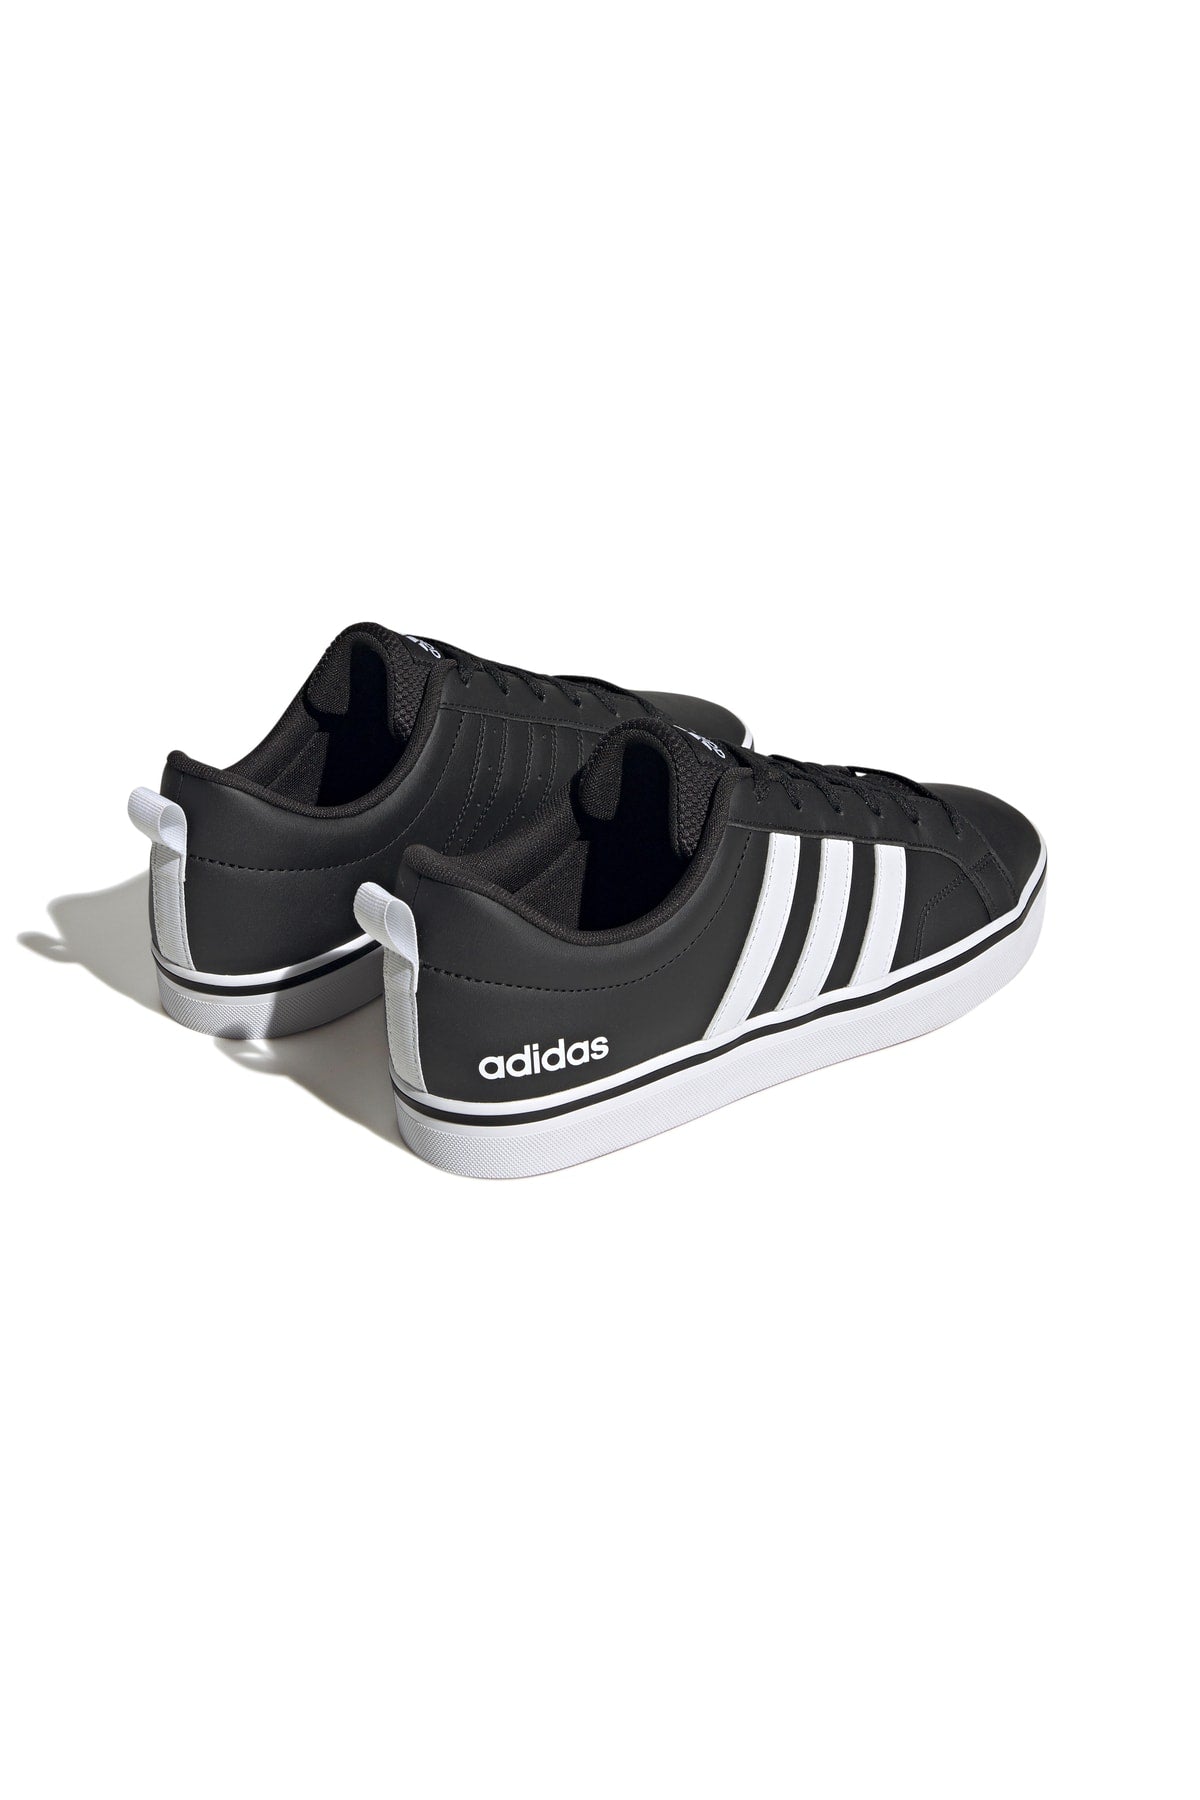 VS Pace 2.0 3-Stripes Branding Synthetic Nubuck Shoes